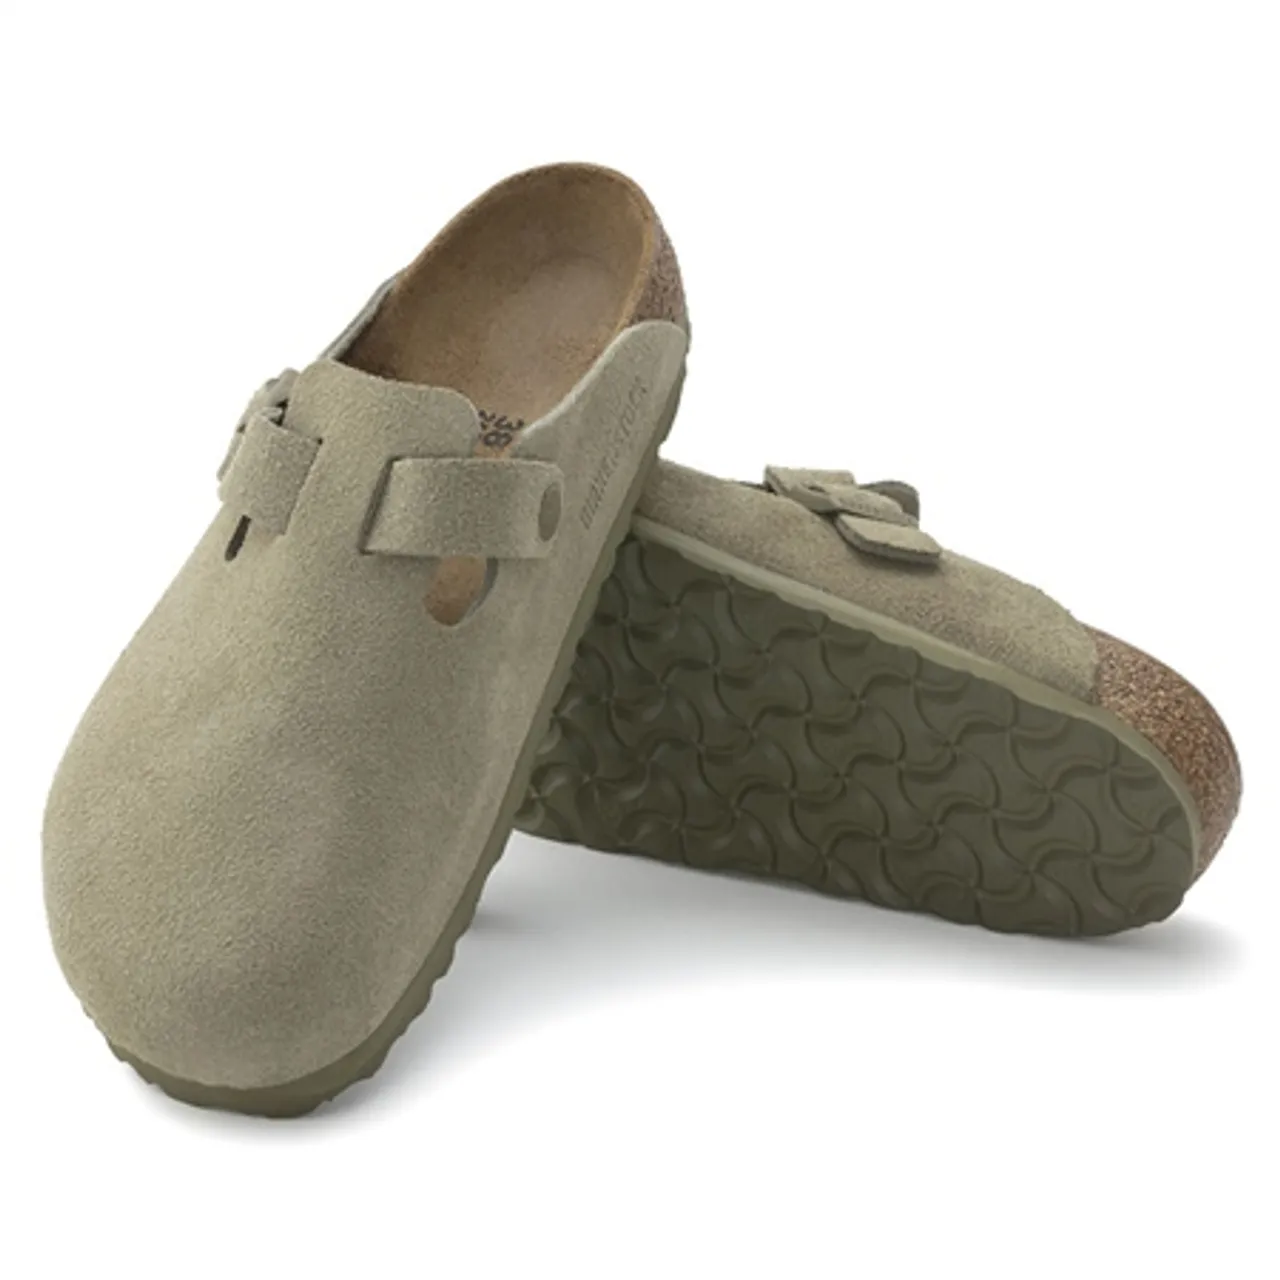 Birkenstock Boston Suede Leather Sandal - Faded Khaki - UK 4.5 (EU 37)